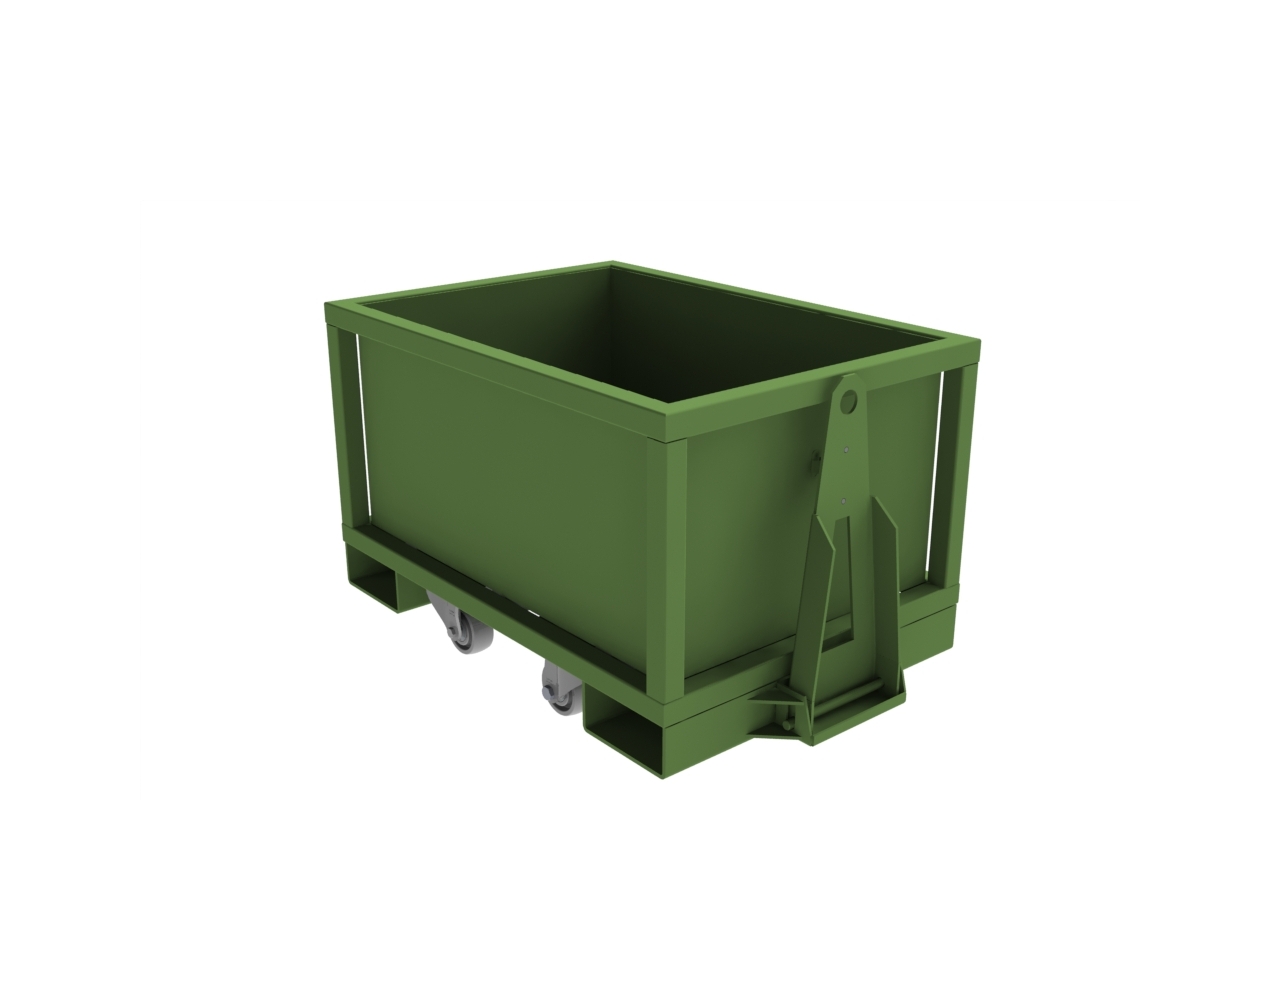 контейнер на колесах с зацепами для металлических отходов_1